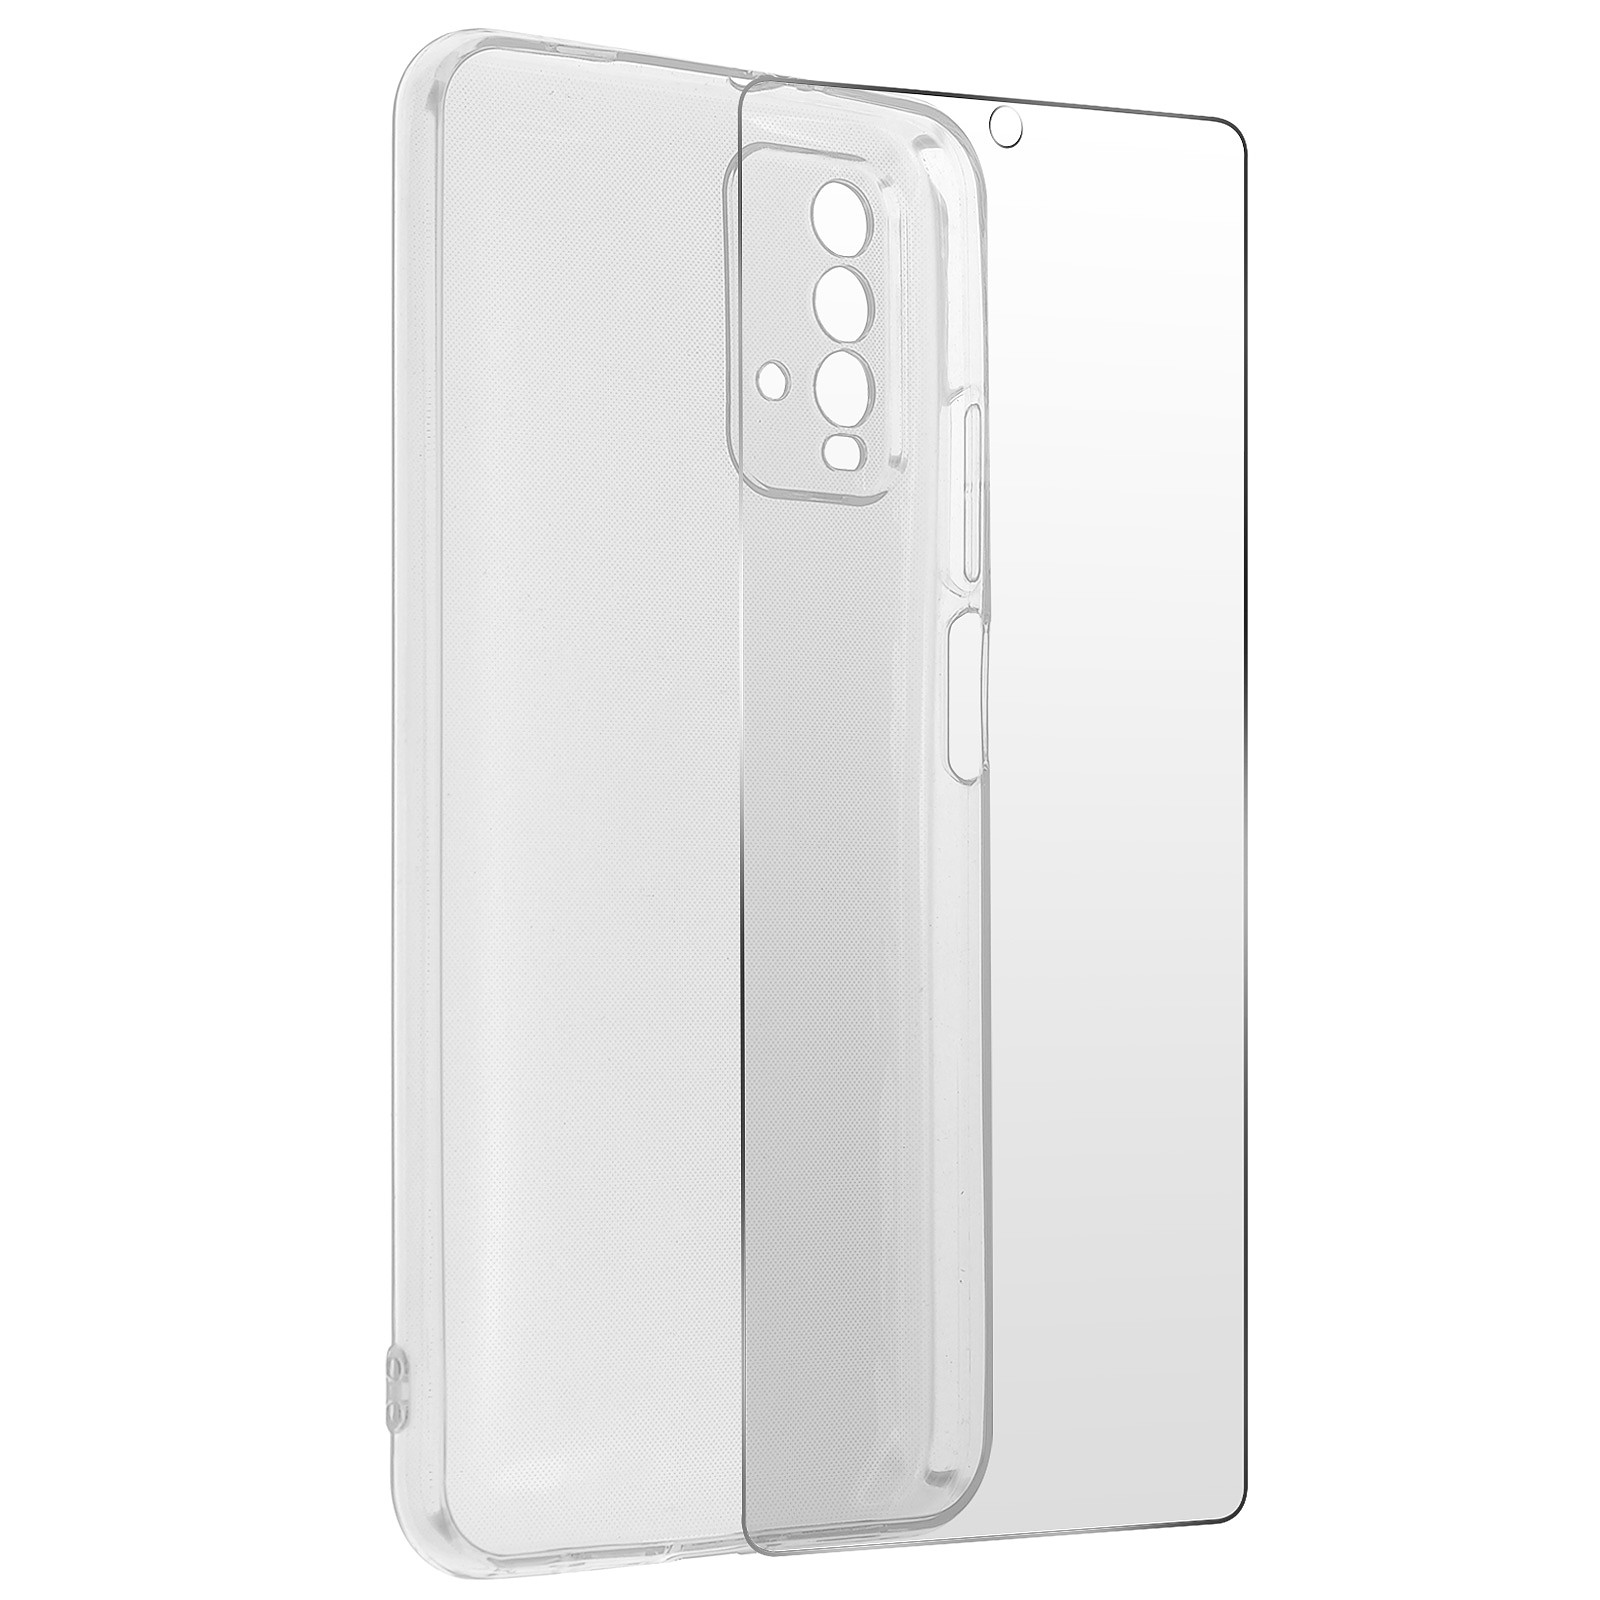 Avizar Coque pour Xiaomi Redmi 9T Souple et Film Verre Trempe Durete 9H Transparent - Coque telephone Avizar